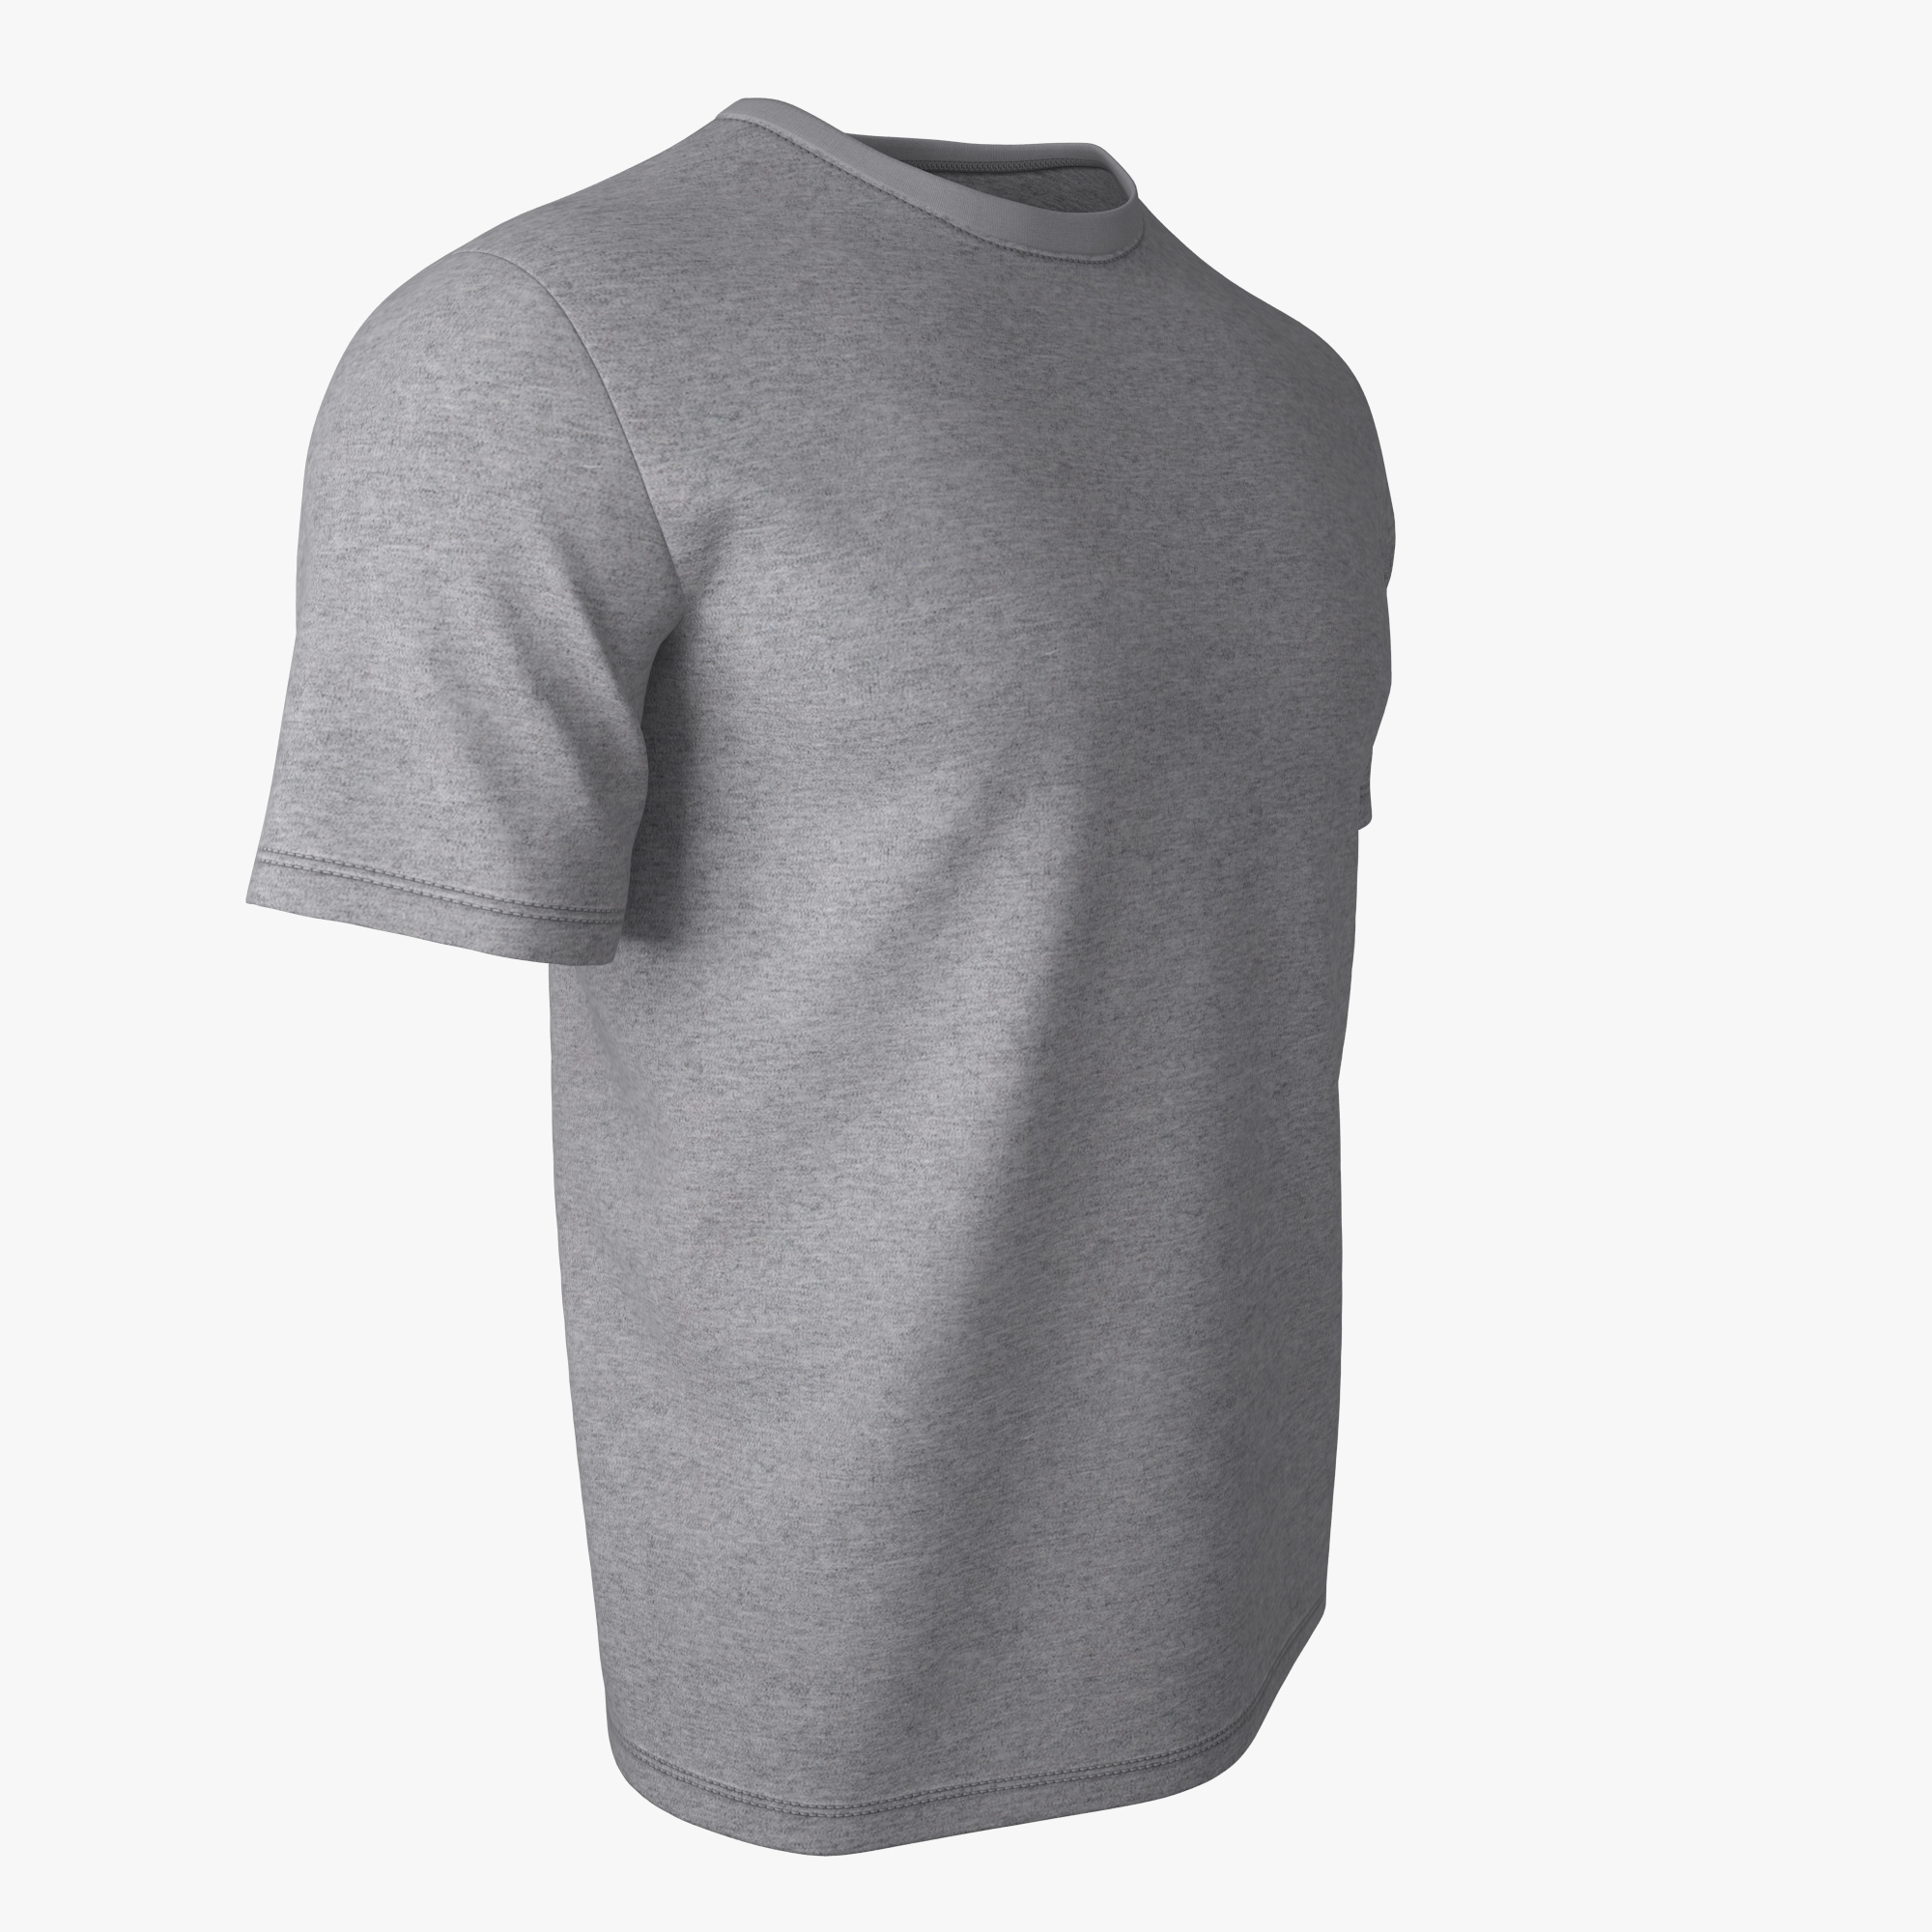 t shirt v2 grey 3d model